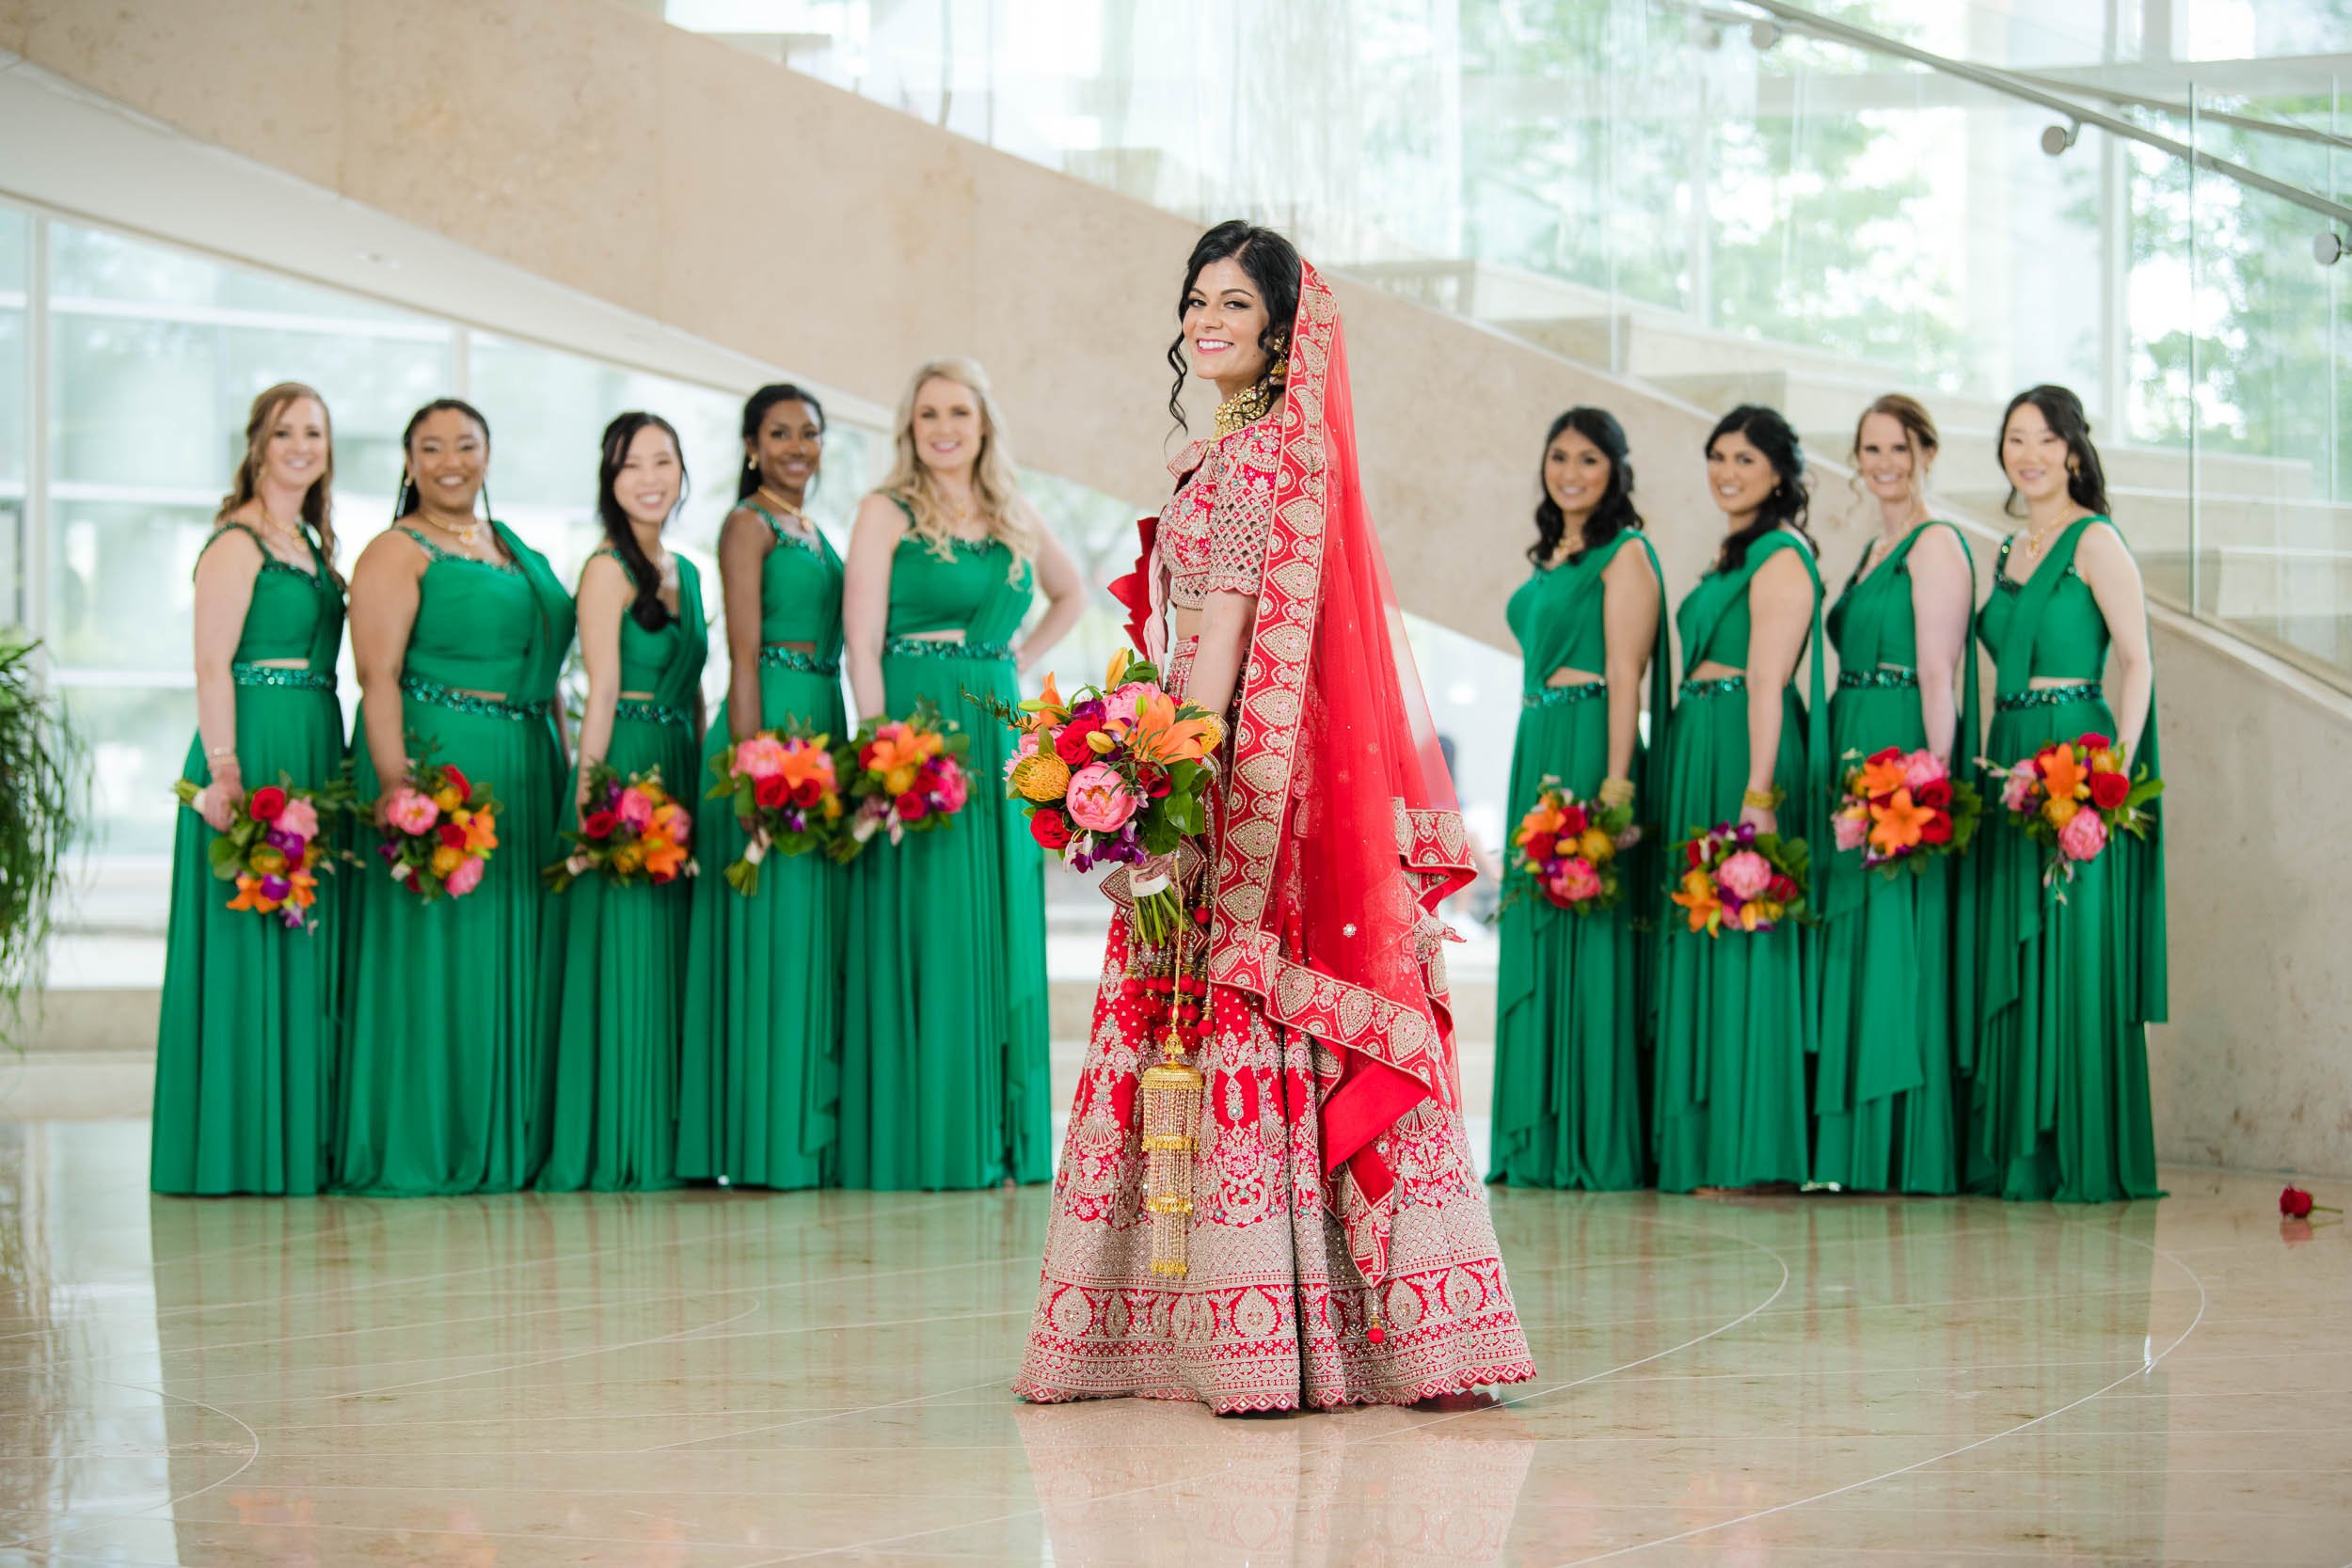 Indian Wedding Photographers Chicago | Renaissance Schaumburg | J. Brown Photography | bride and bridesmaids portrait indoor.